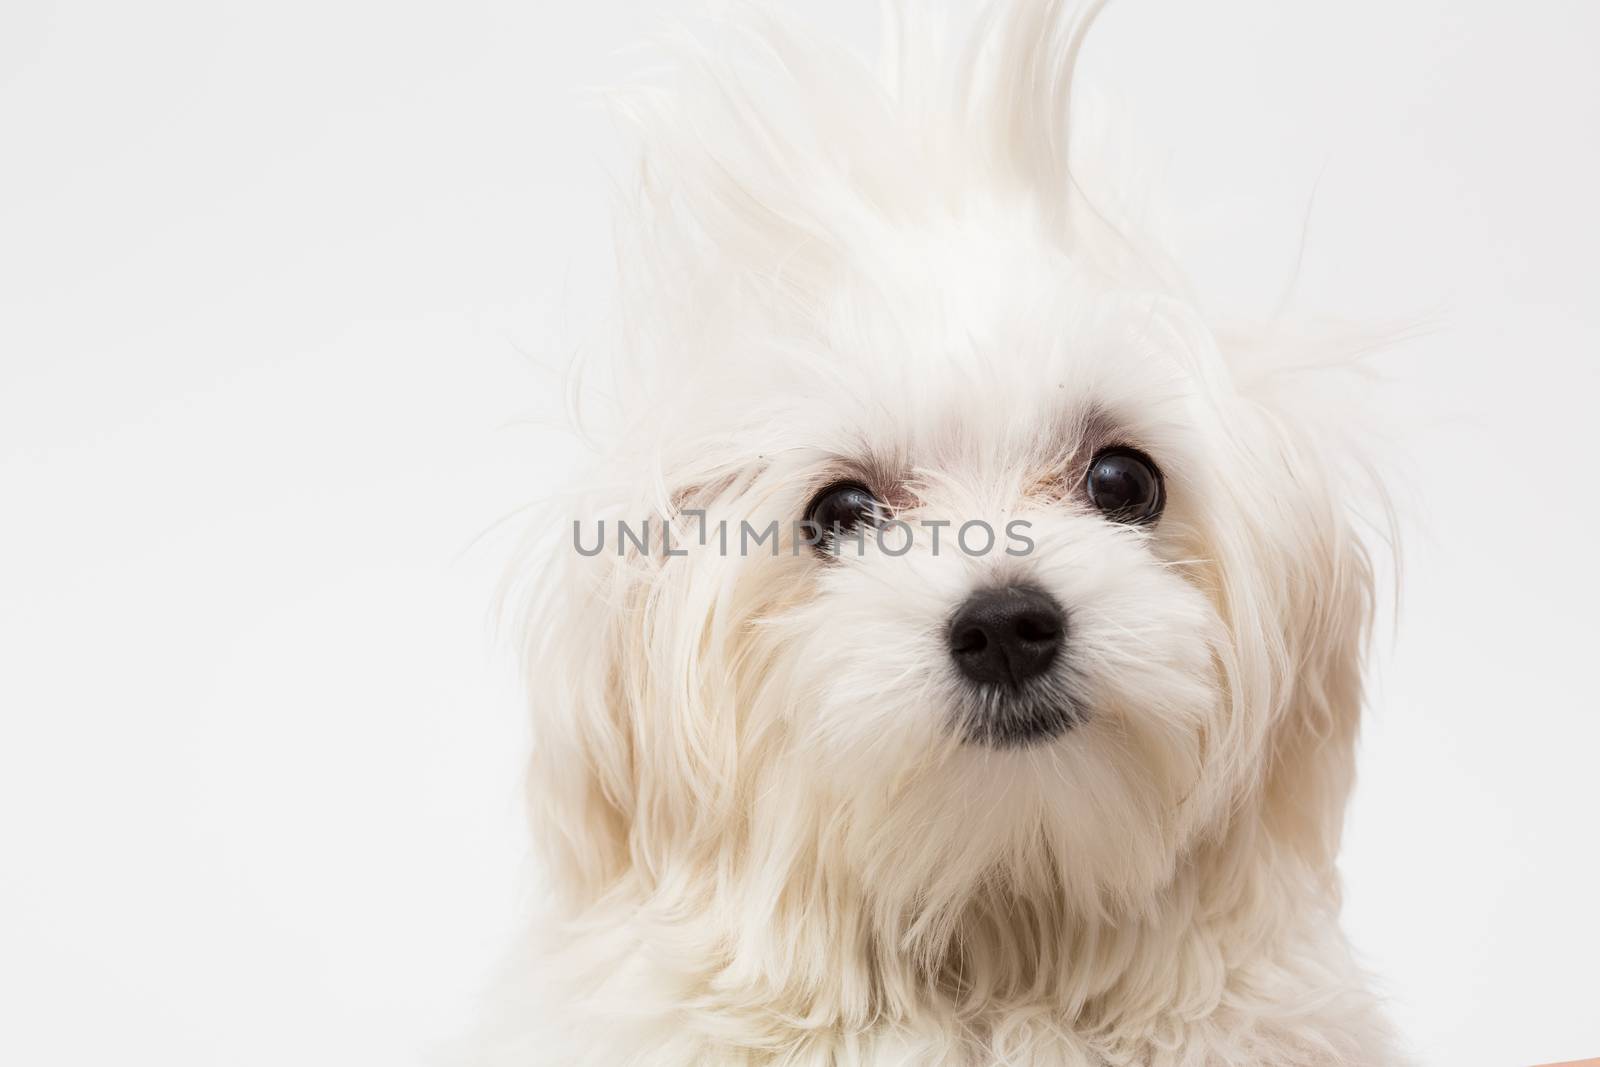 The maltese puppy dog on white background